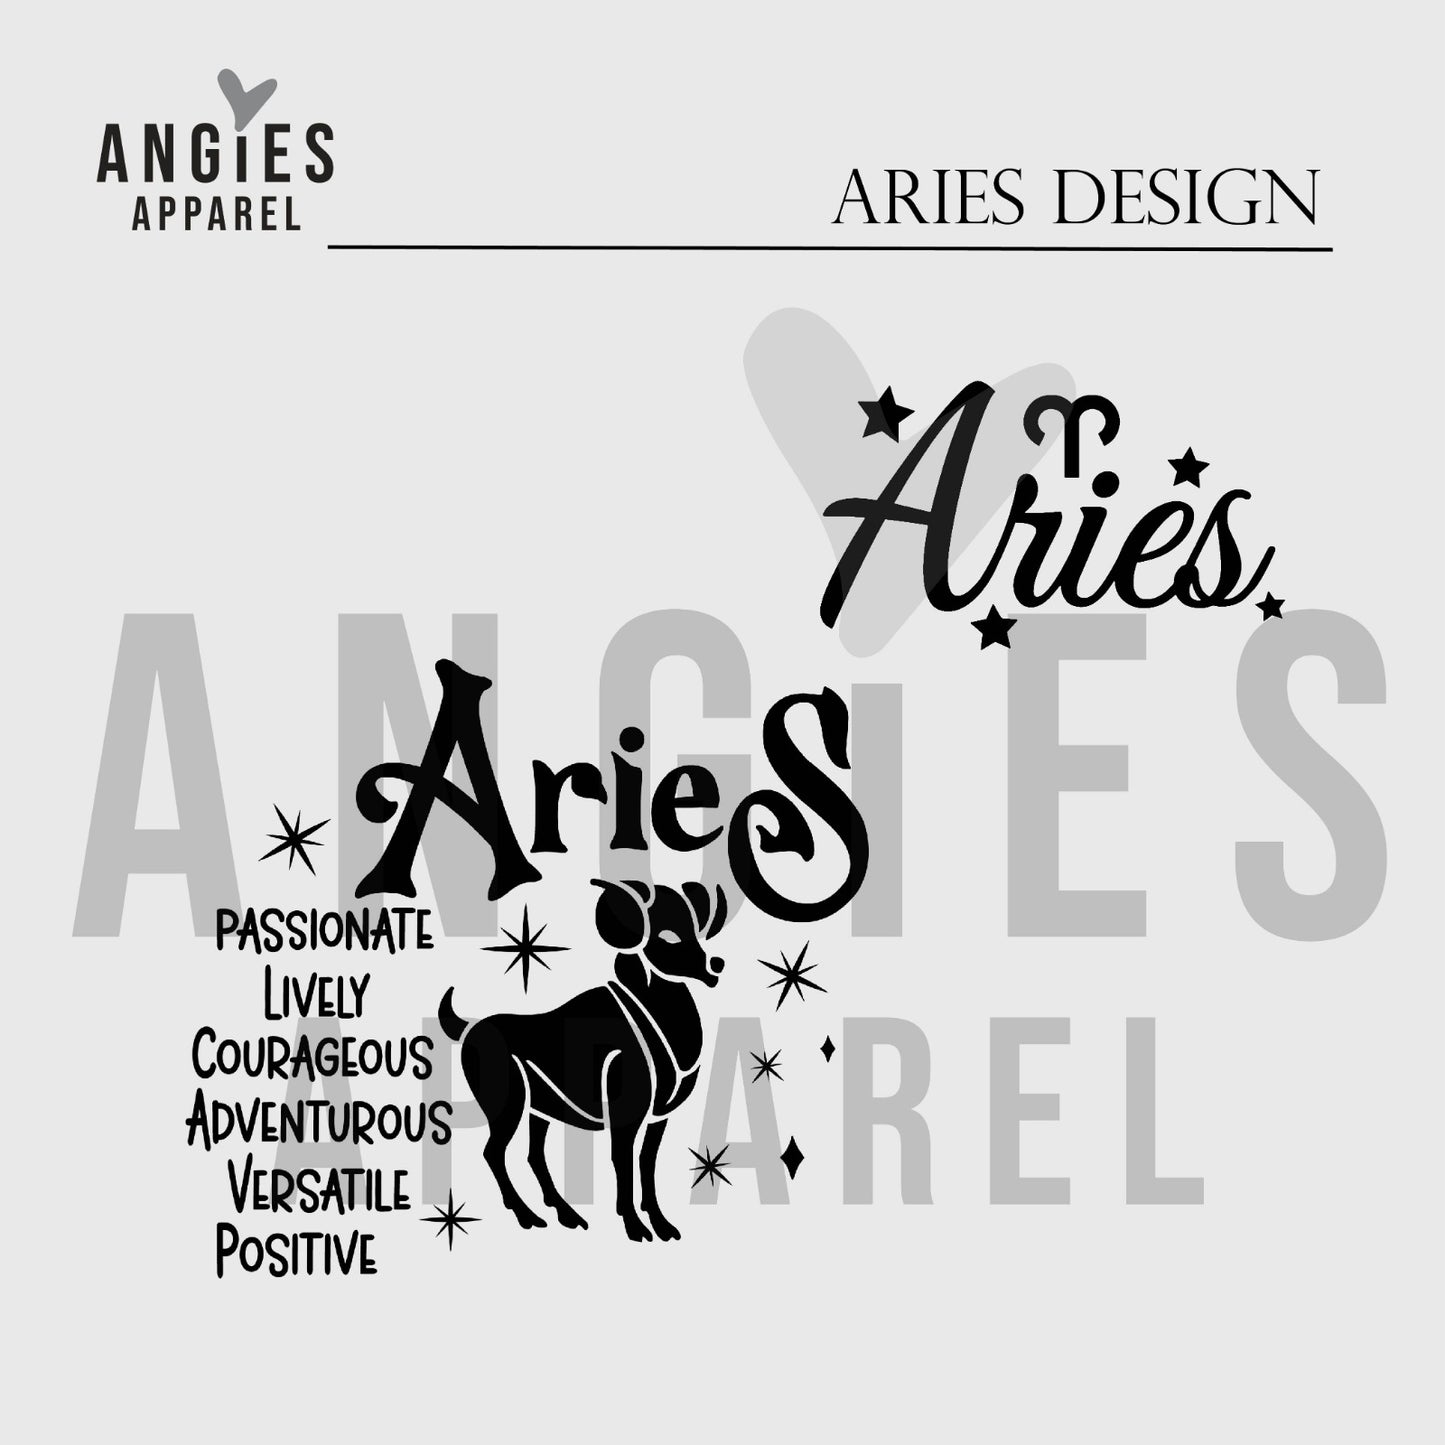 4. Aries